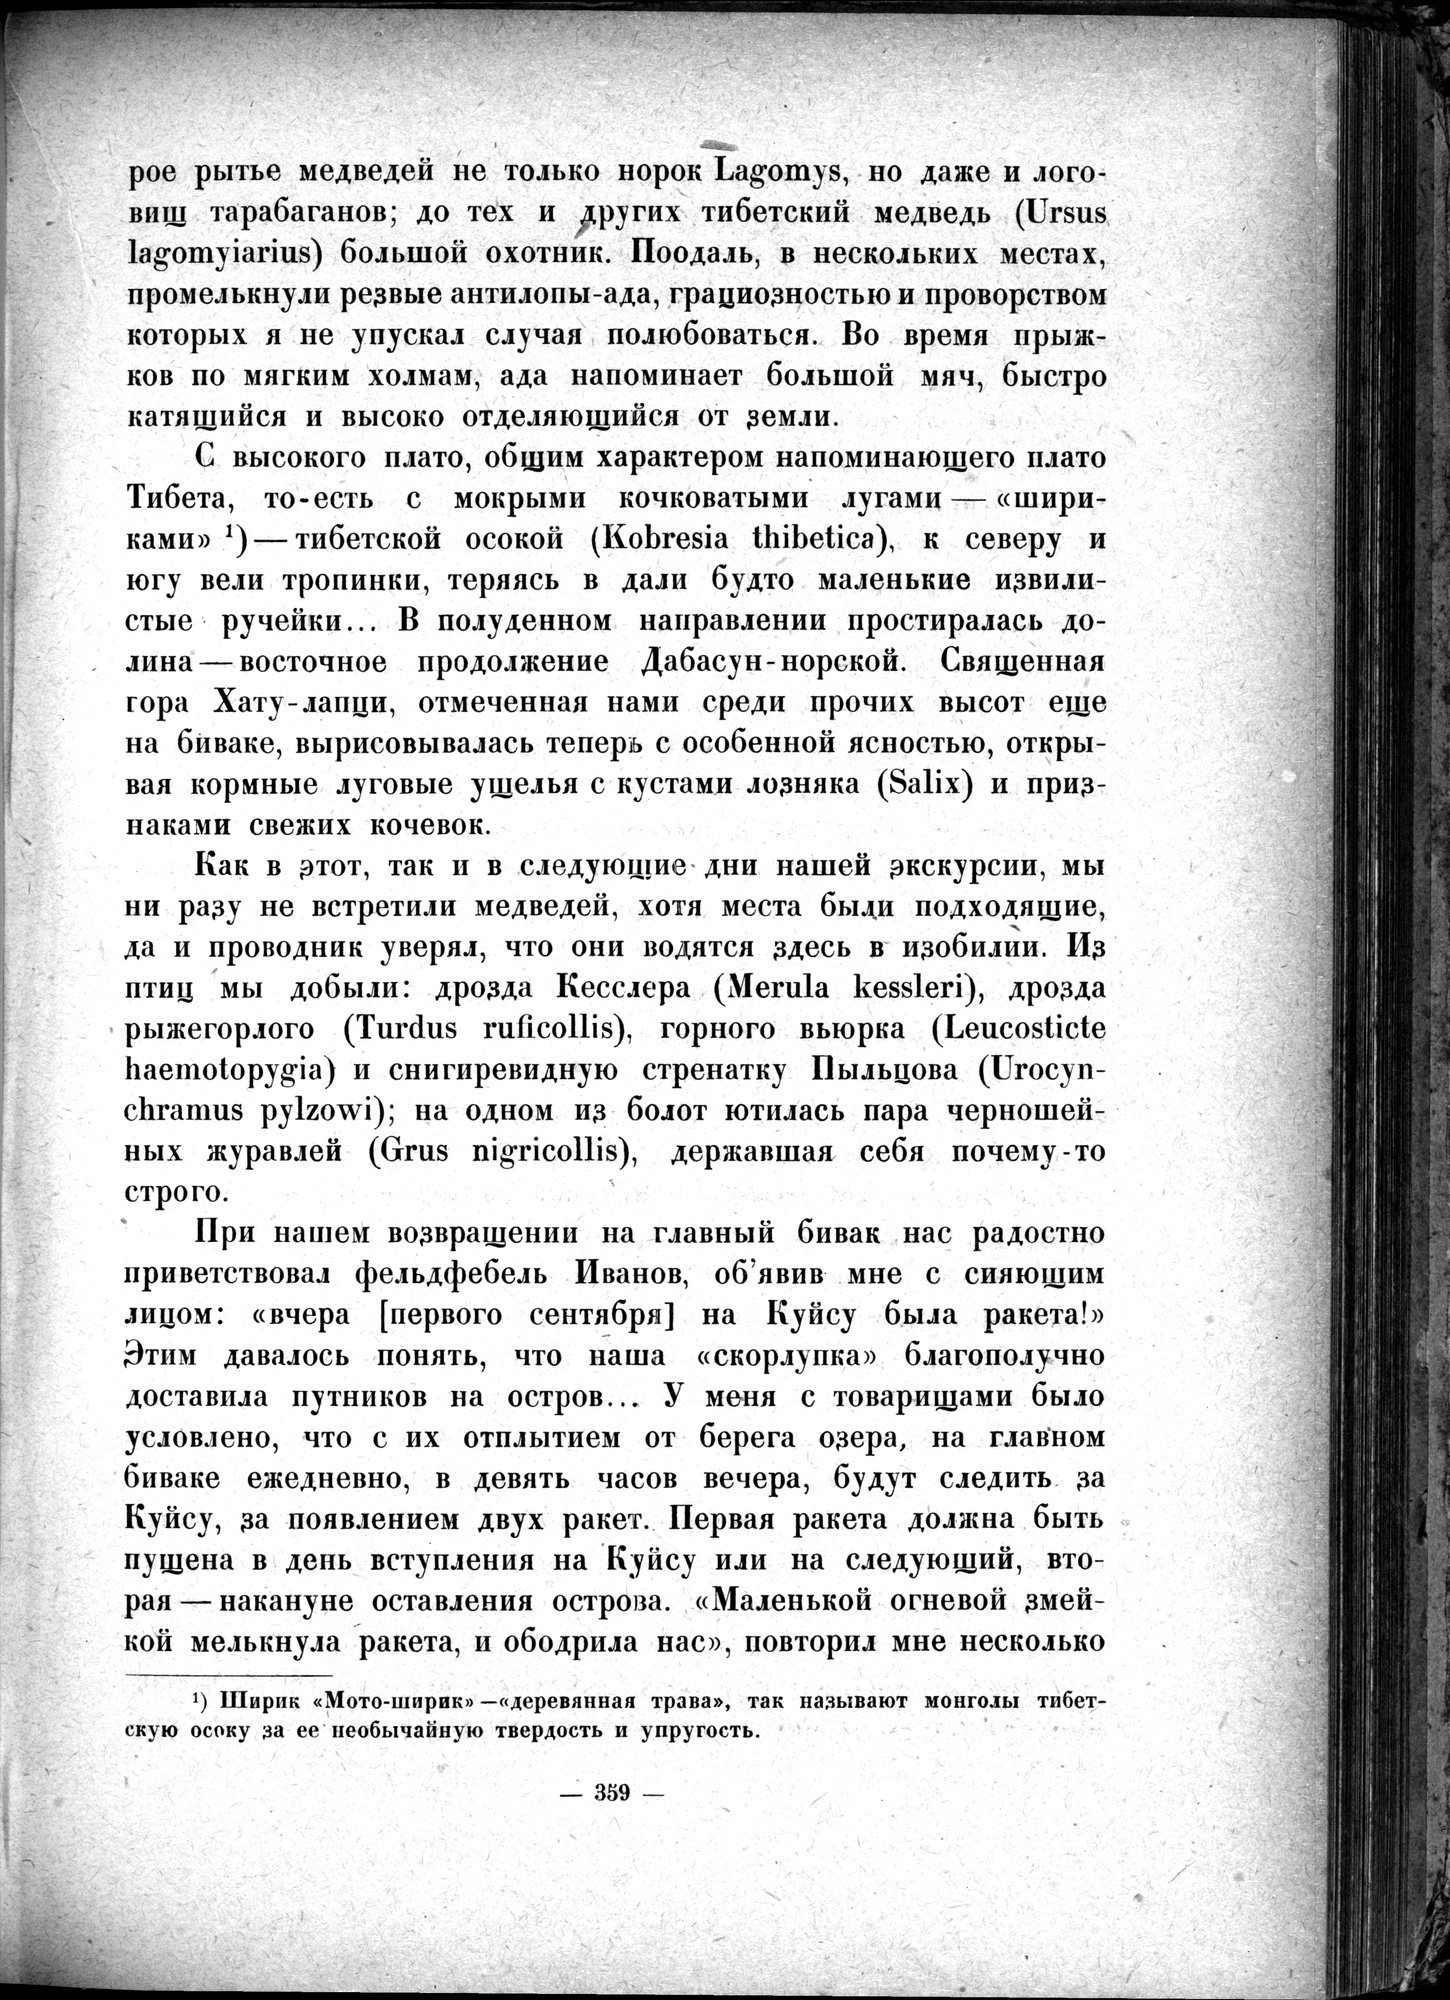 Mongoliya i Amdo i mertby gorod Khara-Khoto : vol.1 / Page 409 (Grayscale High Resolution Image)